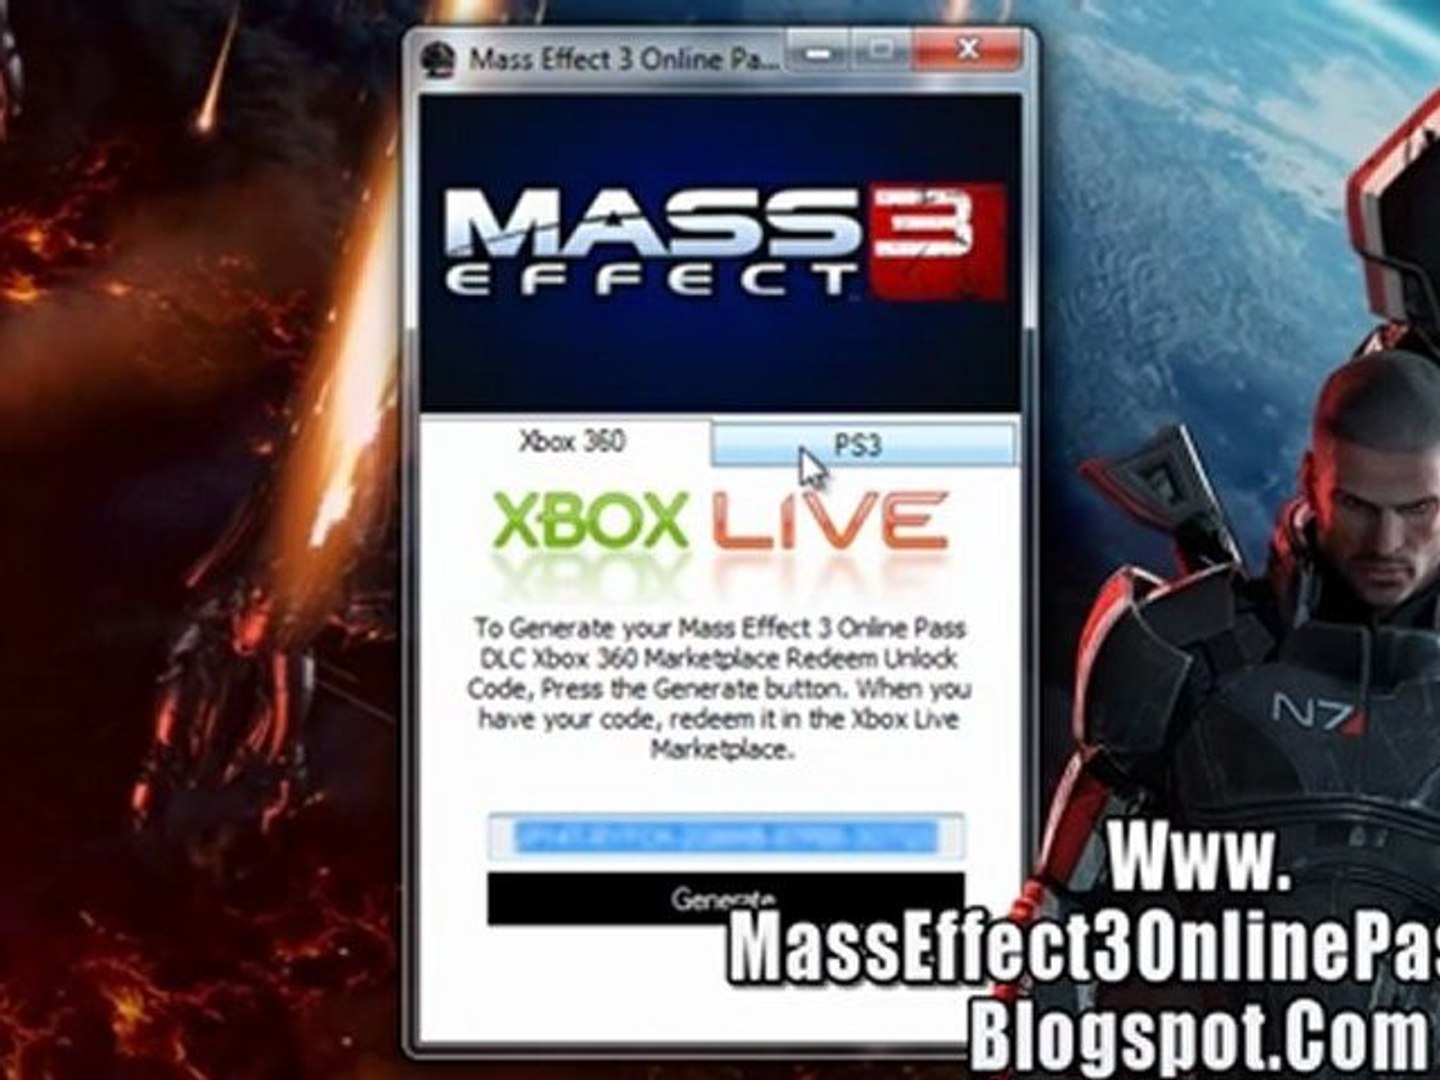 Mass Effect 3 Online Pass Code Unlock Tutorial - Xbox 360 - PS3 - video  Dailymotion